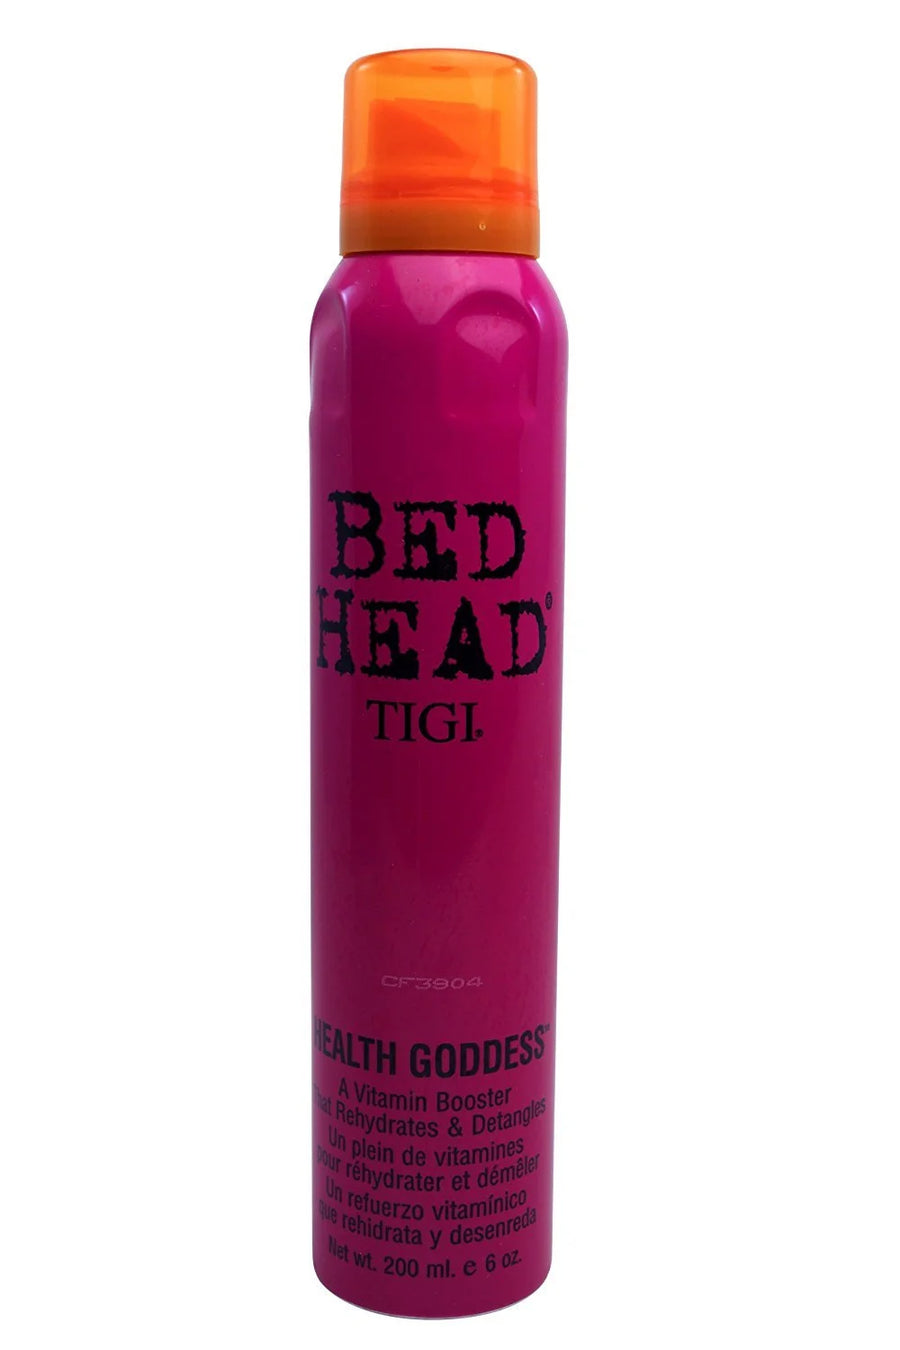 Tigi Bed Head Health Goddess A Vitamin Booster image of 6 oz bottle